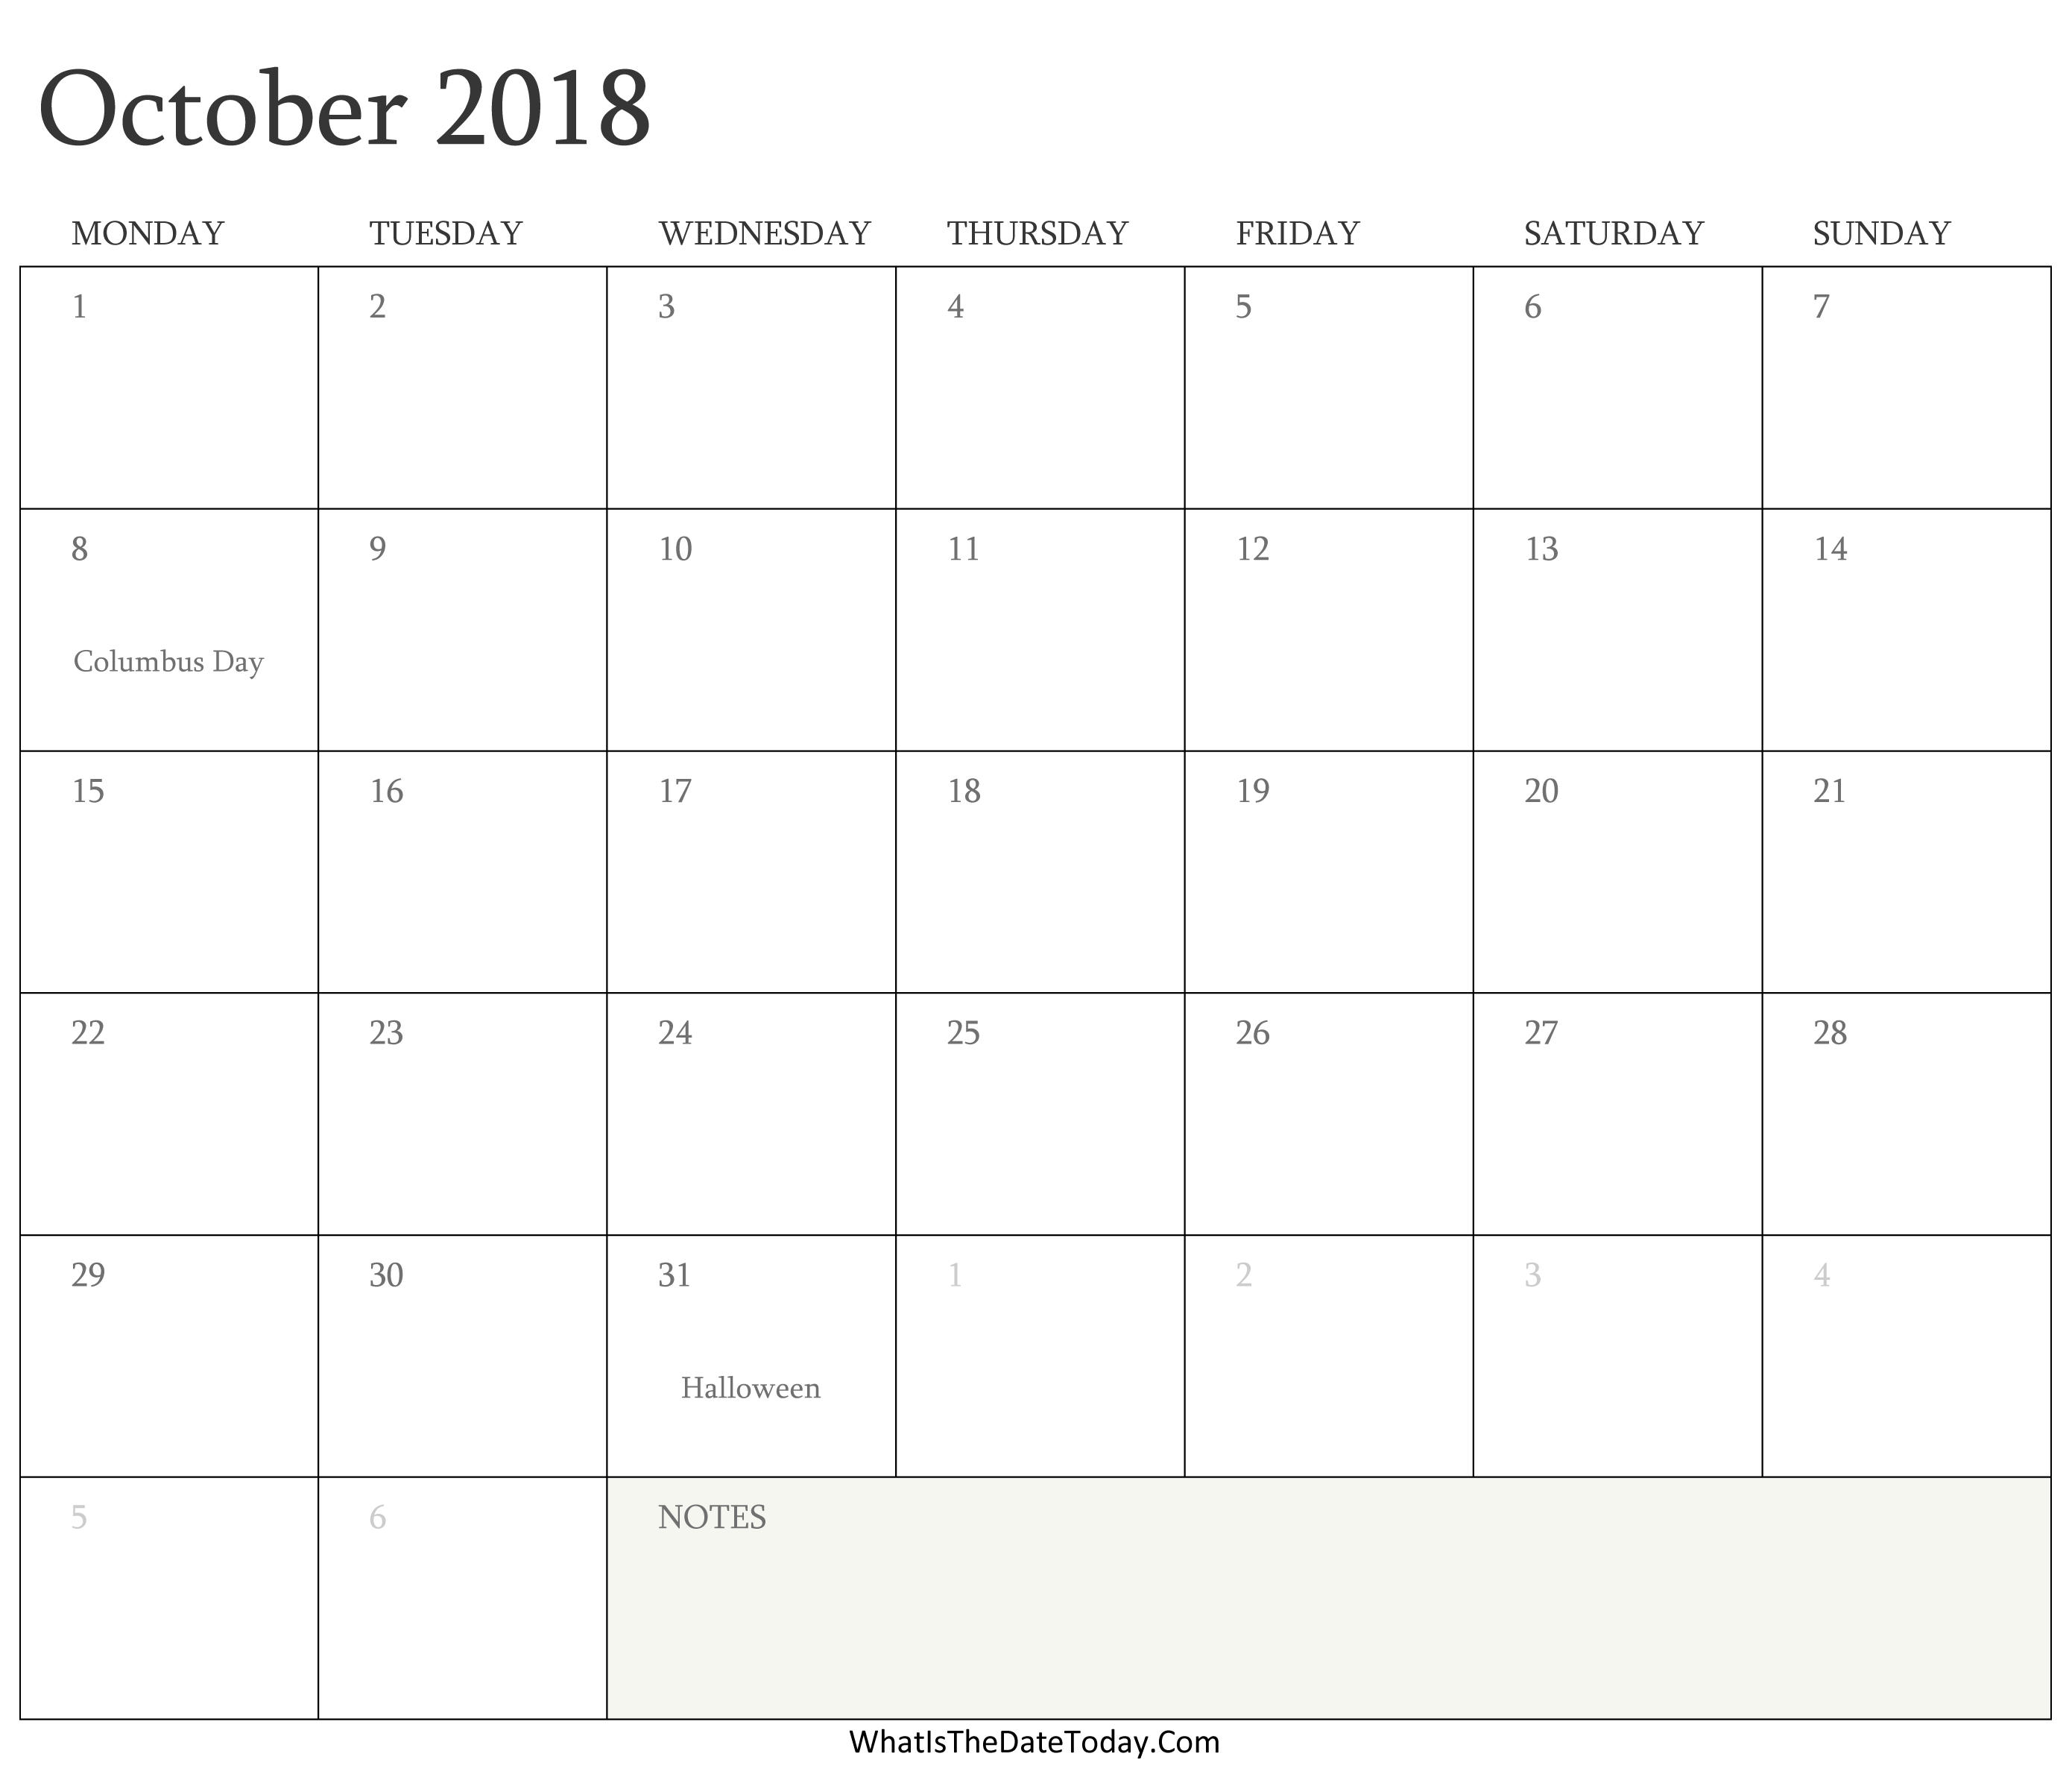 special-needs-calendar-october-2018-stateline-kids